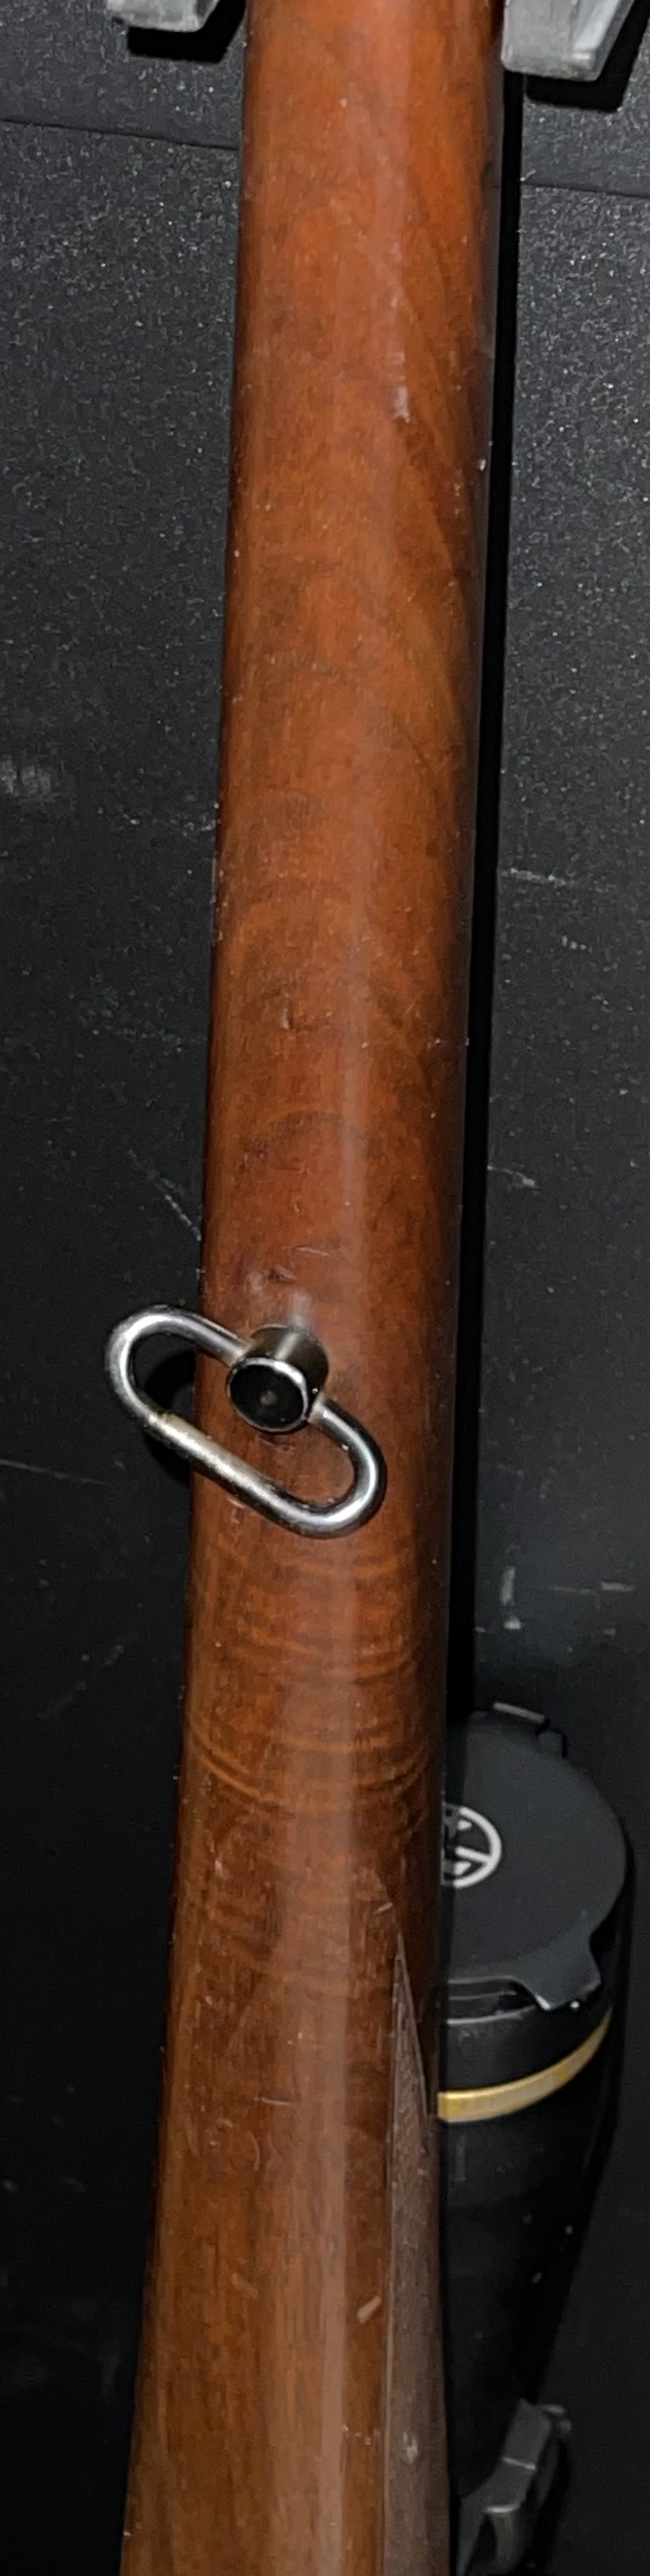 Cherche sling pour carabine de chasse Img_0112